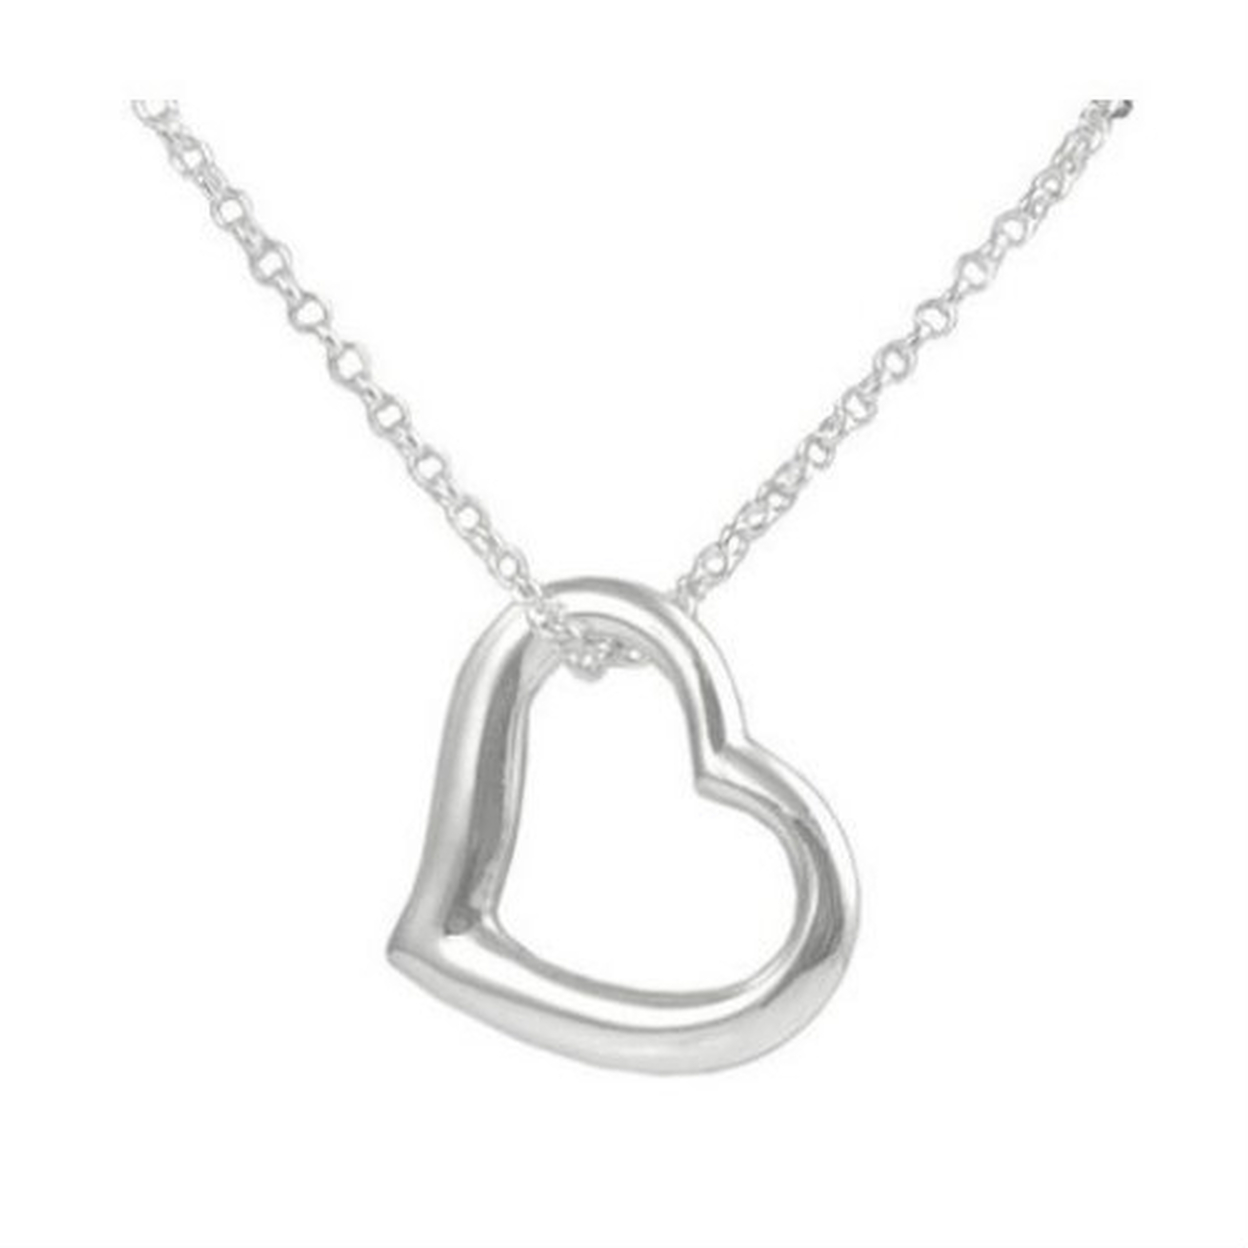 Sterling Silver Floating Heart Pendant Necklace | eBay